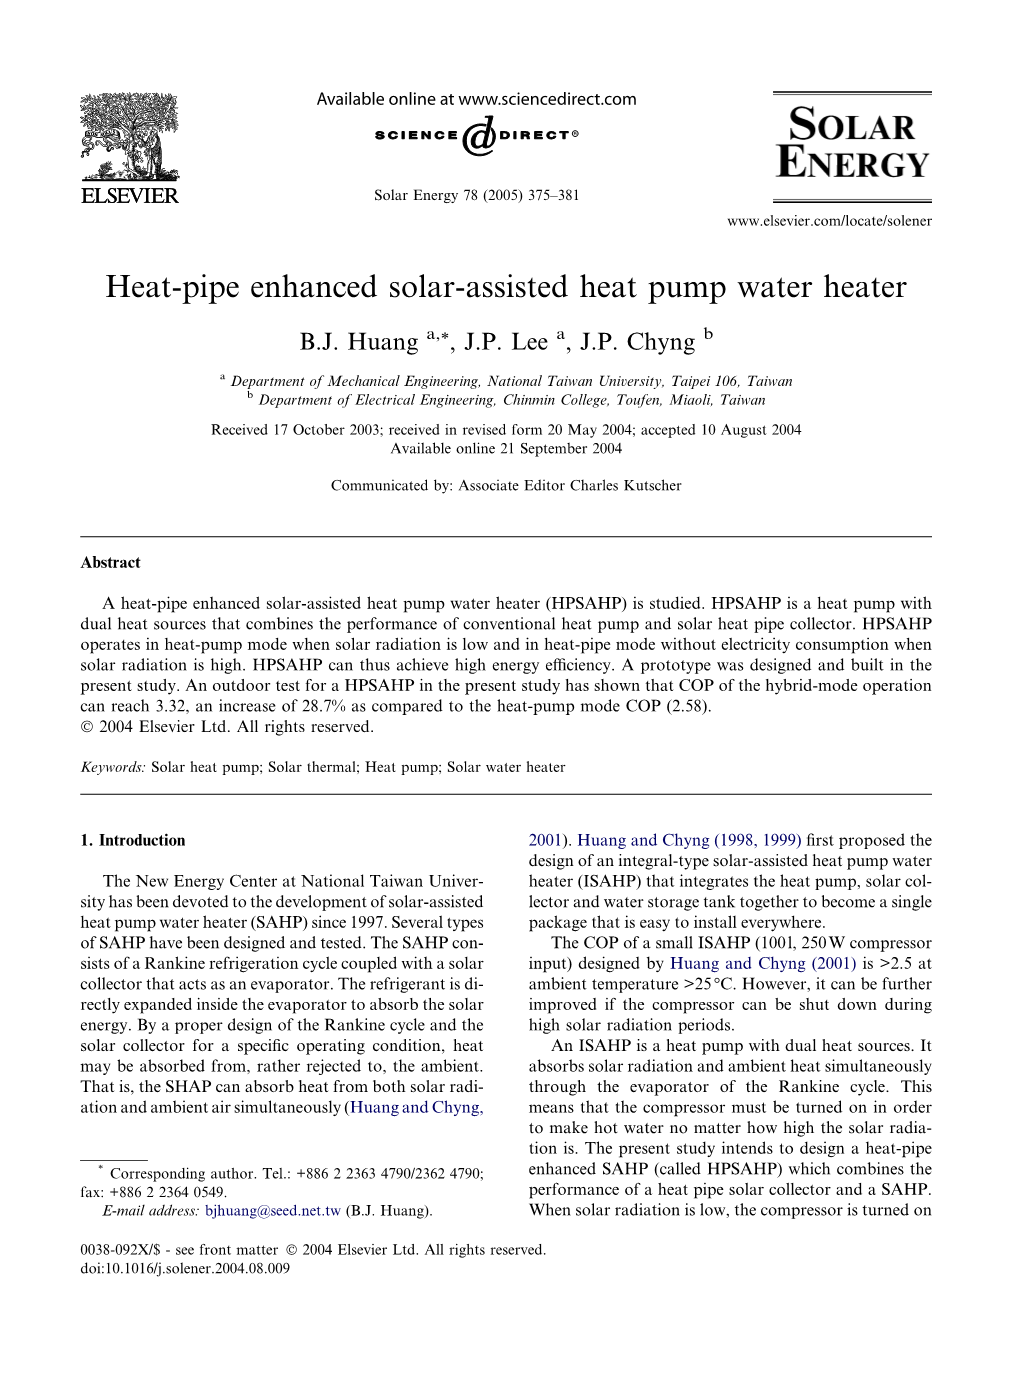 Heat-Pipe Enhanced Solar-Assisted Heat Pump Water Heater